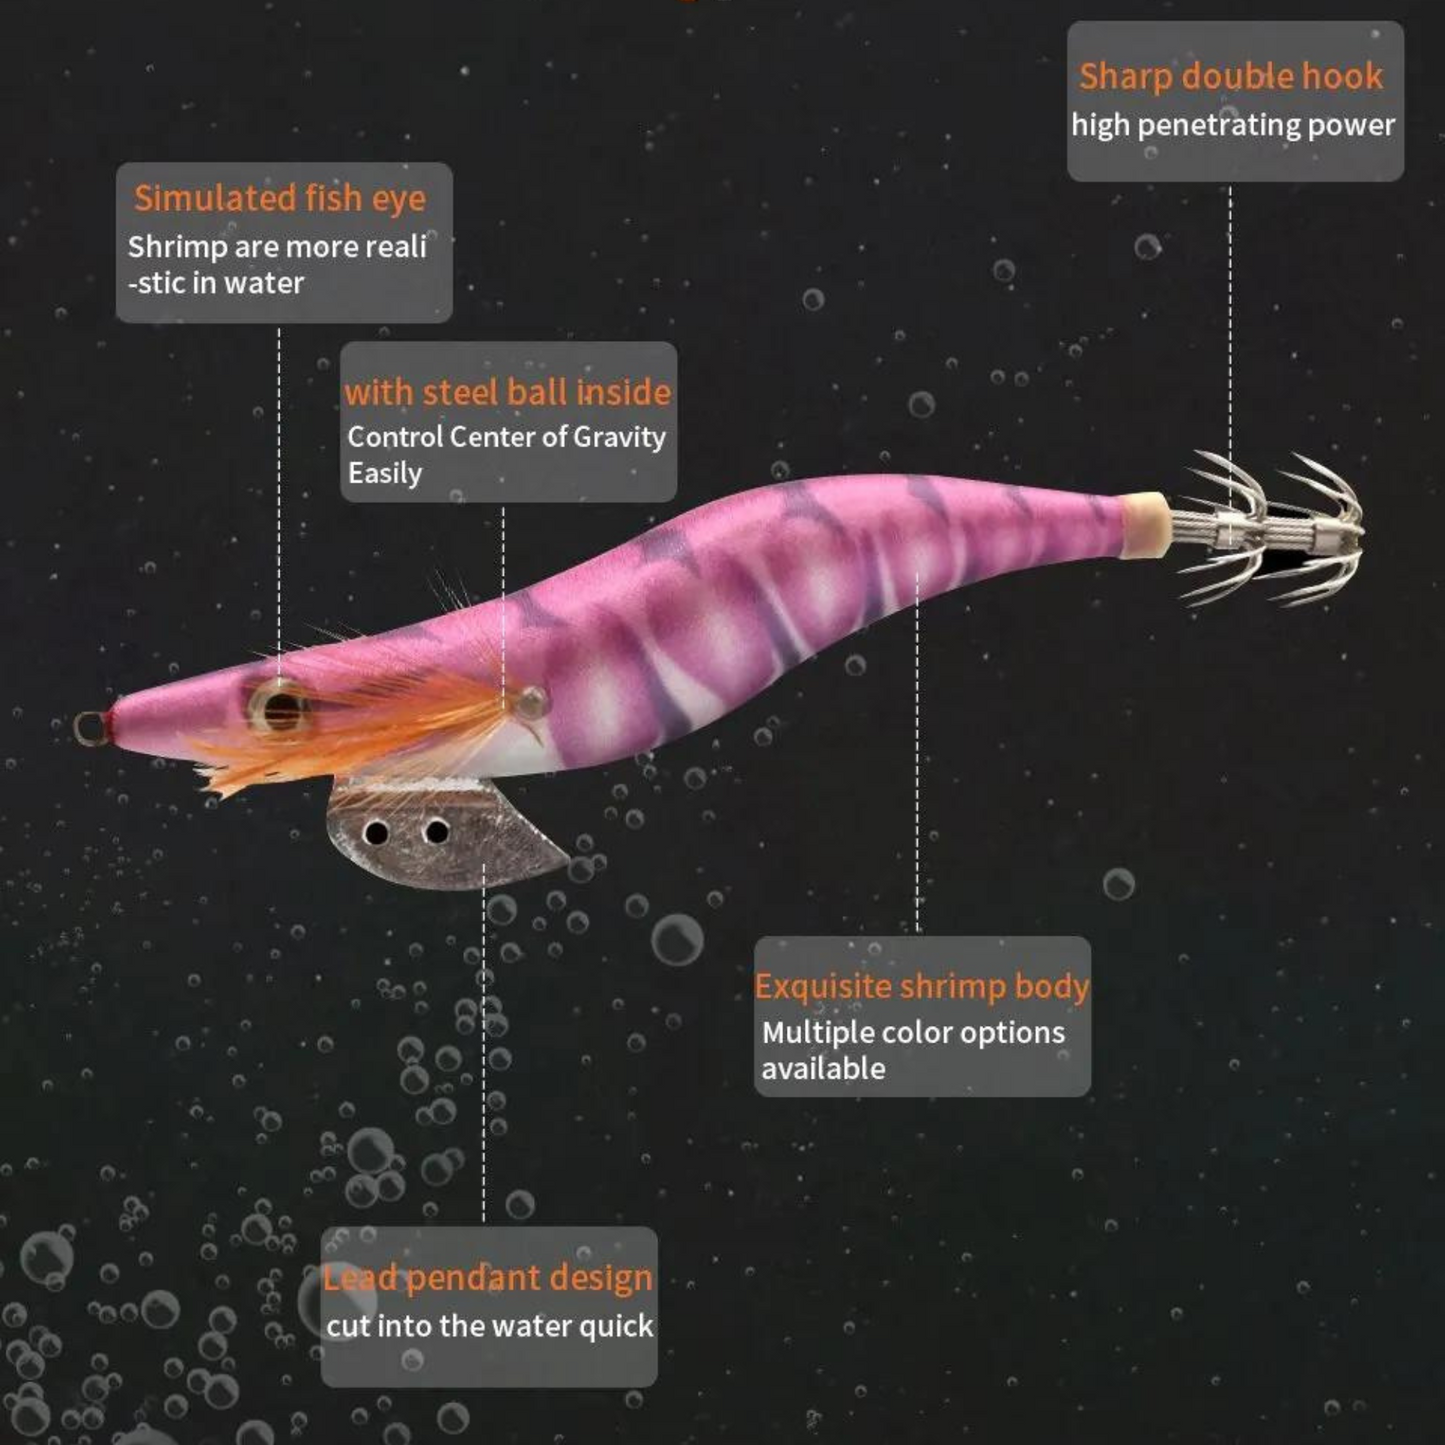 Babalu Cuttlefish / Squid Jig Luminous LA 3.0 | 1 unit